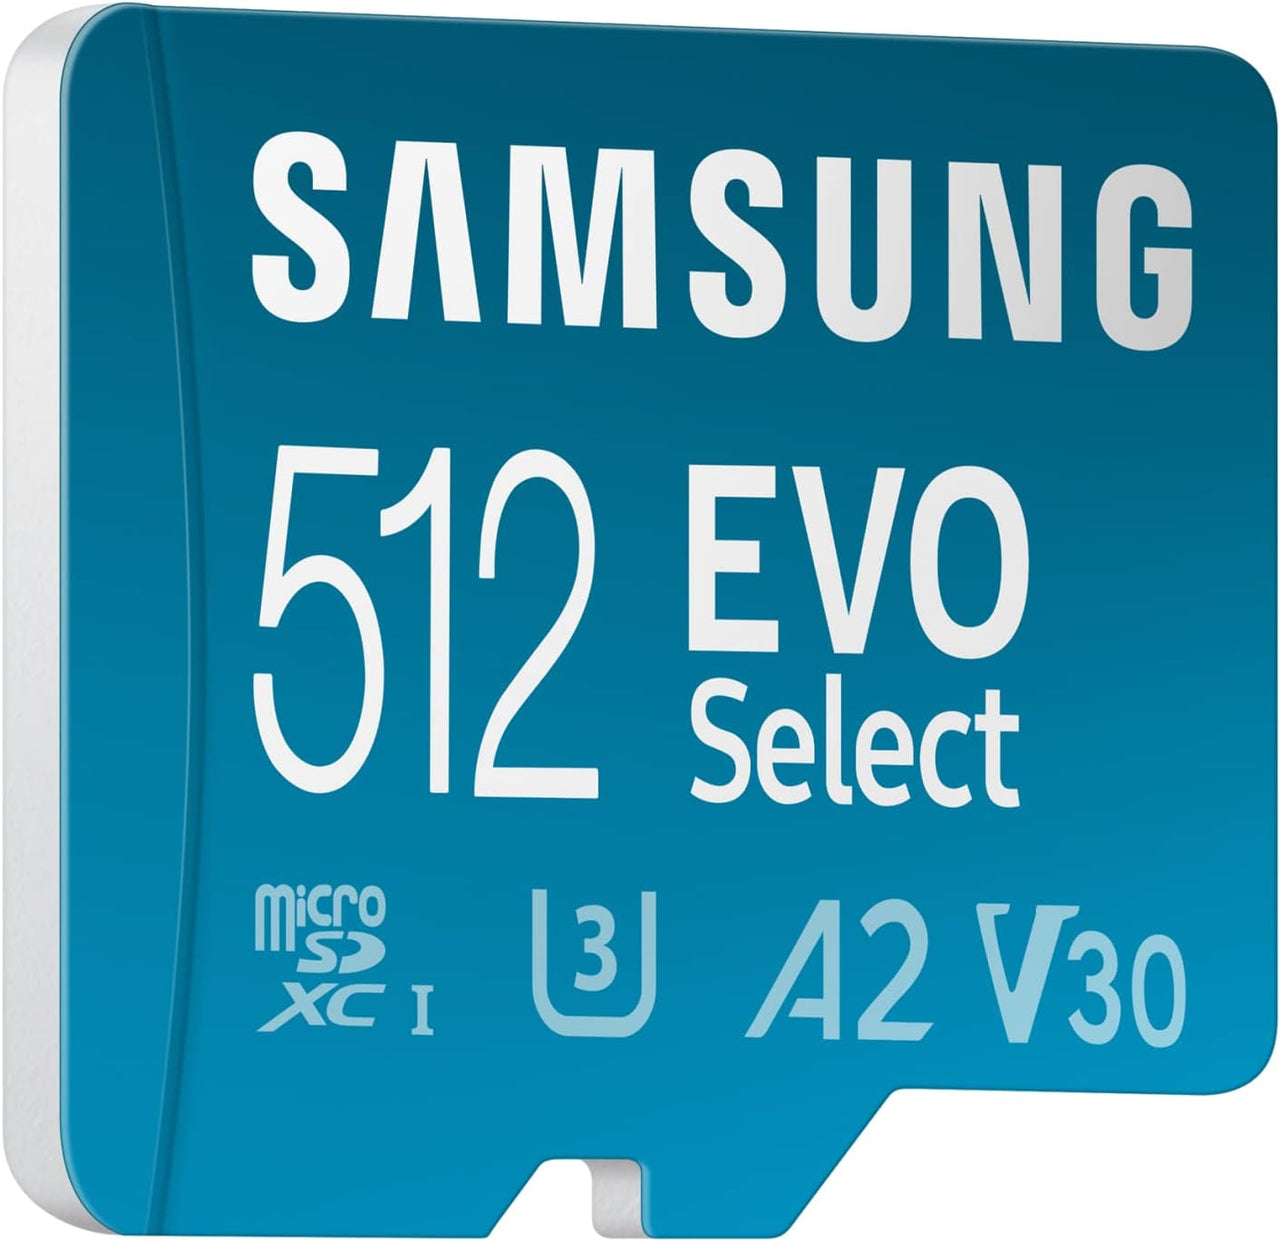 Samsung EVO Select Micro SD + Adapter SDXC 512GB 130MB/s for 4K UHD UHS-I, U3, A2, V30